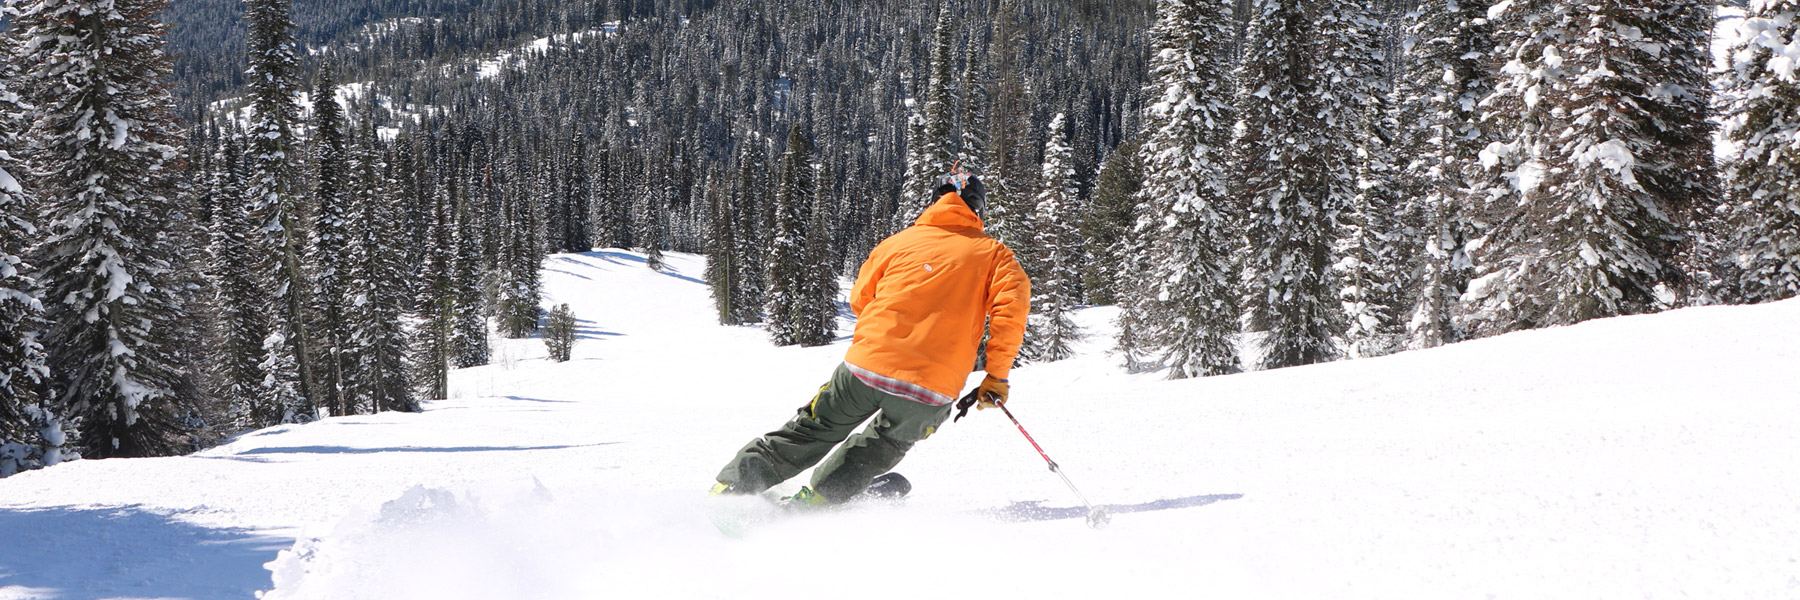 Skiing in Idaho Means Skiing Brundage